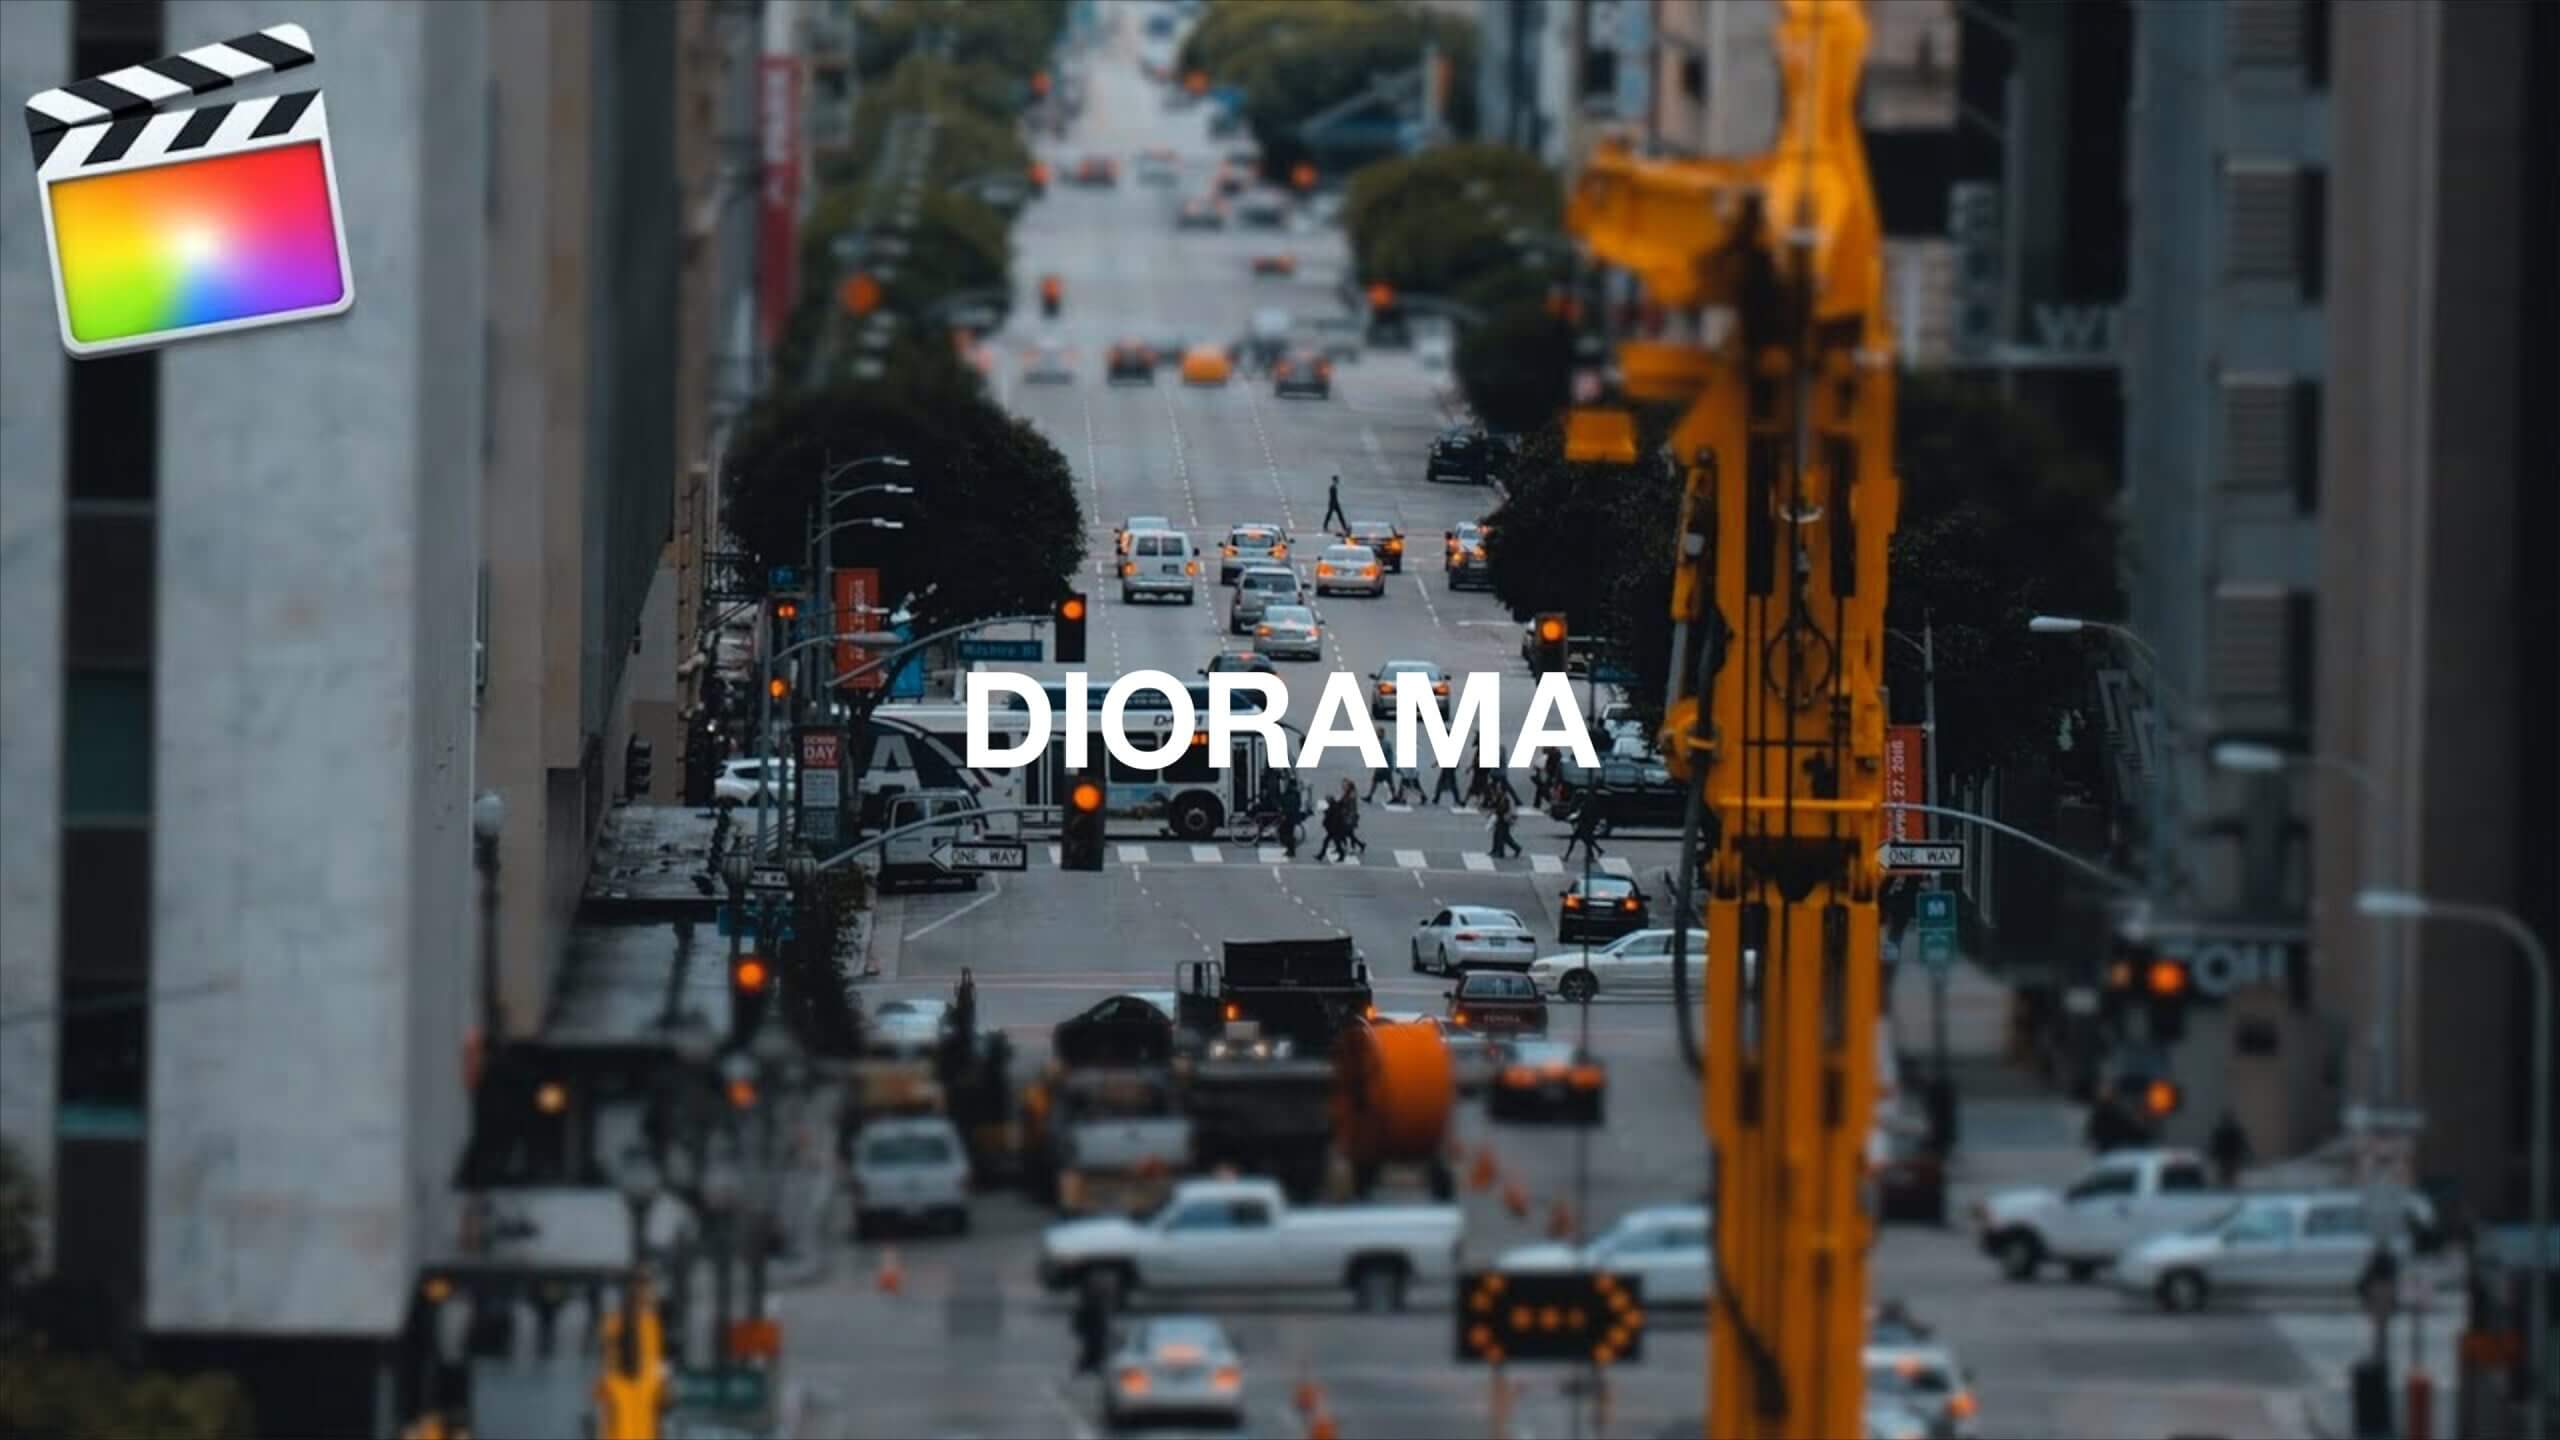 Final Cut Pro X ジオラマ「Diorama」映像にする方法